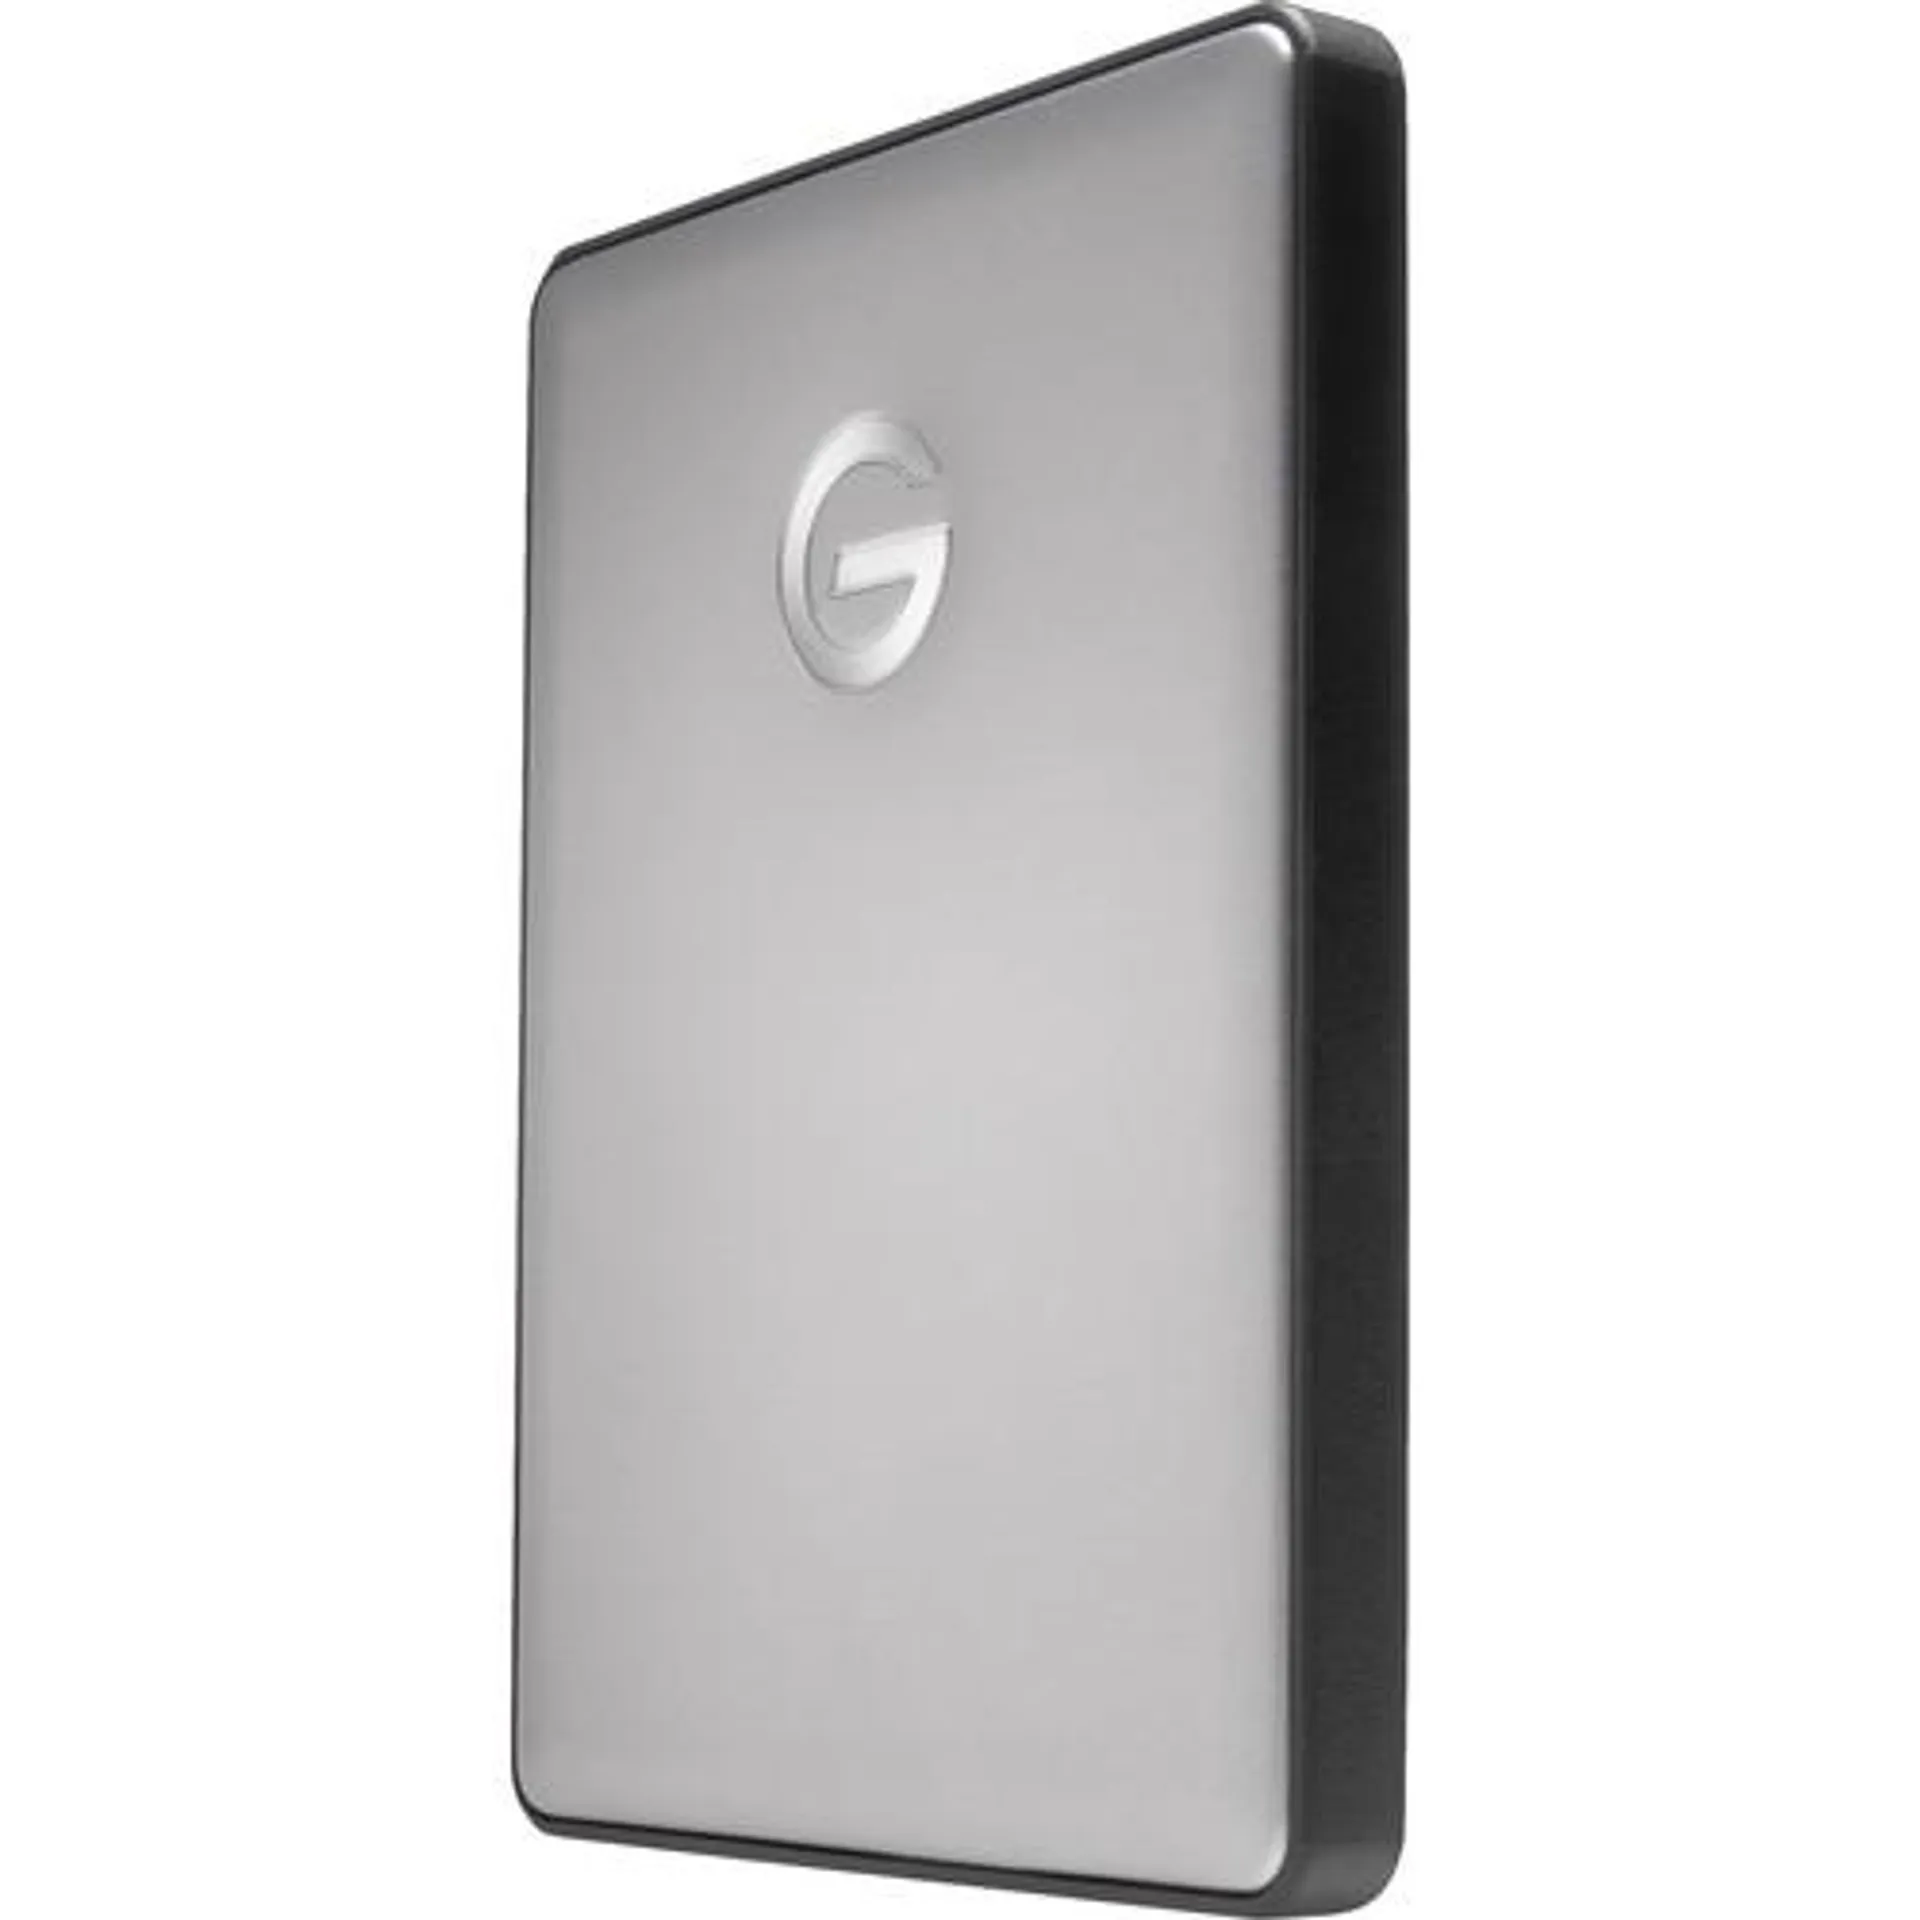 G-Technology 1TB G-DRIVE mobile USB 3.1 Gen 1 Type-C External Hard Drive (Space Gray)